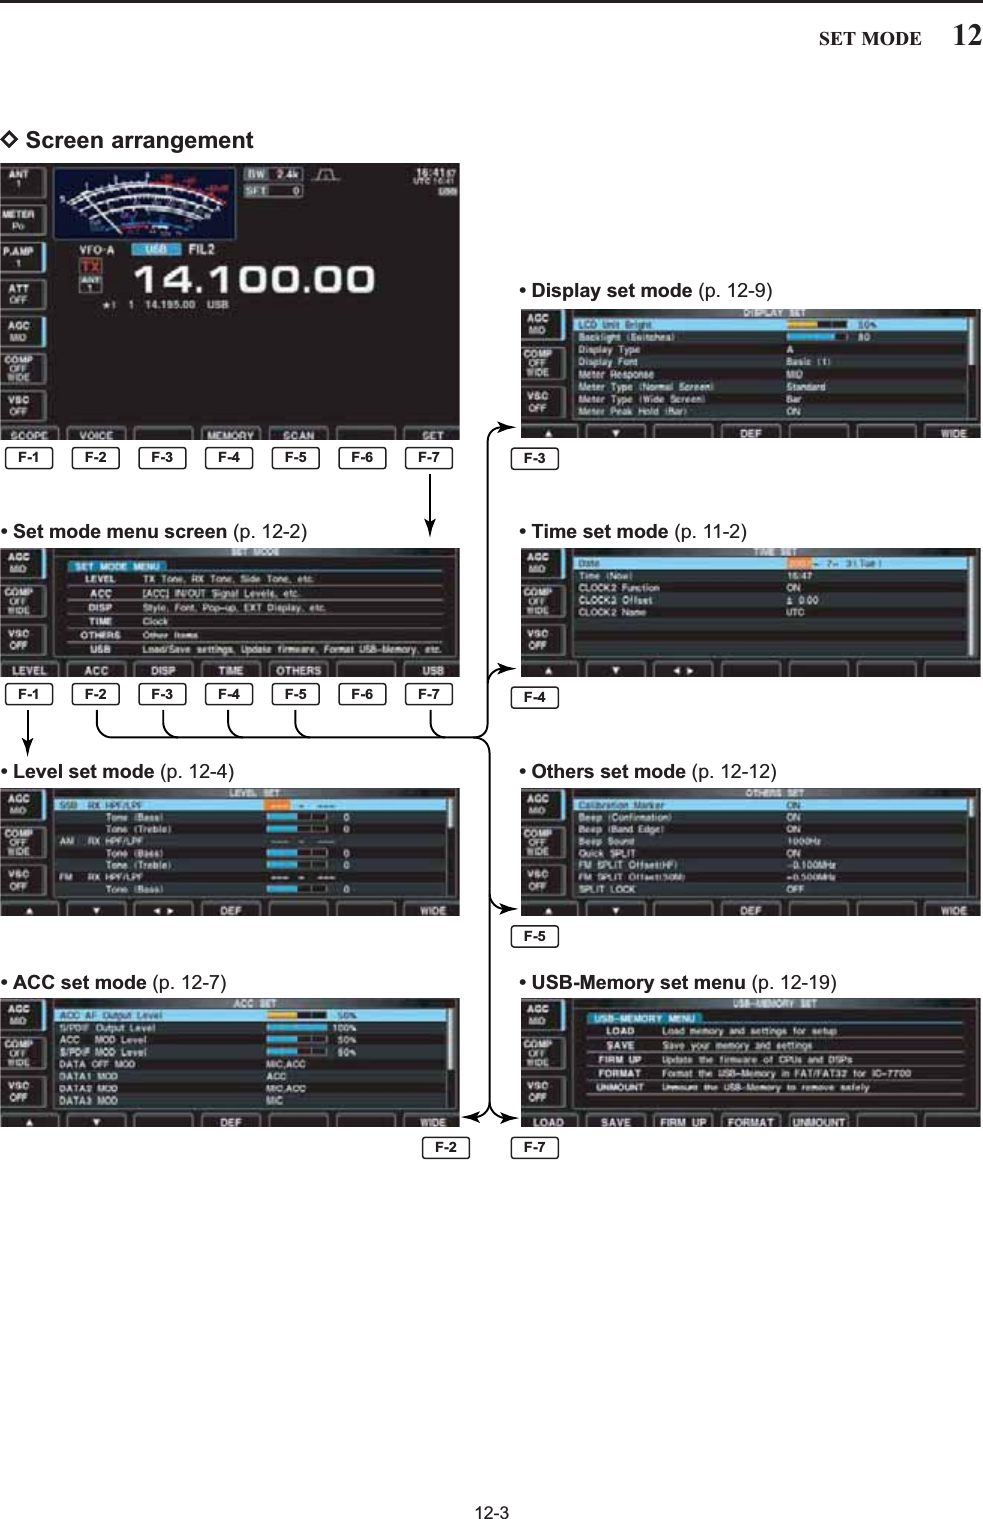 12-312SET MODEDScreen arrangement• Set mode menu screen (p. 12-2)• Level set mode (p. 12-4)• ACC set mode (p. 12-7)• Time set mode (p. 11-2)• Display set mode (p. 12-9)• Others set mode (p. 12-12)• USB-Memory set menu (p. 12-19)F-1 F-2 F-3F-3F-4F-5F-7F-2F-4 F-5 F-6 F-7F-1 F-2 F-3 F-4 F-5 F-6 F-7